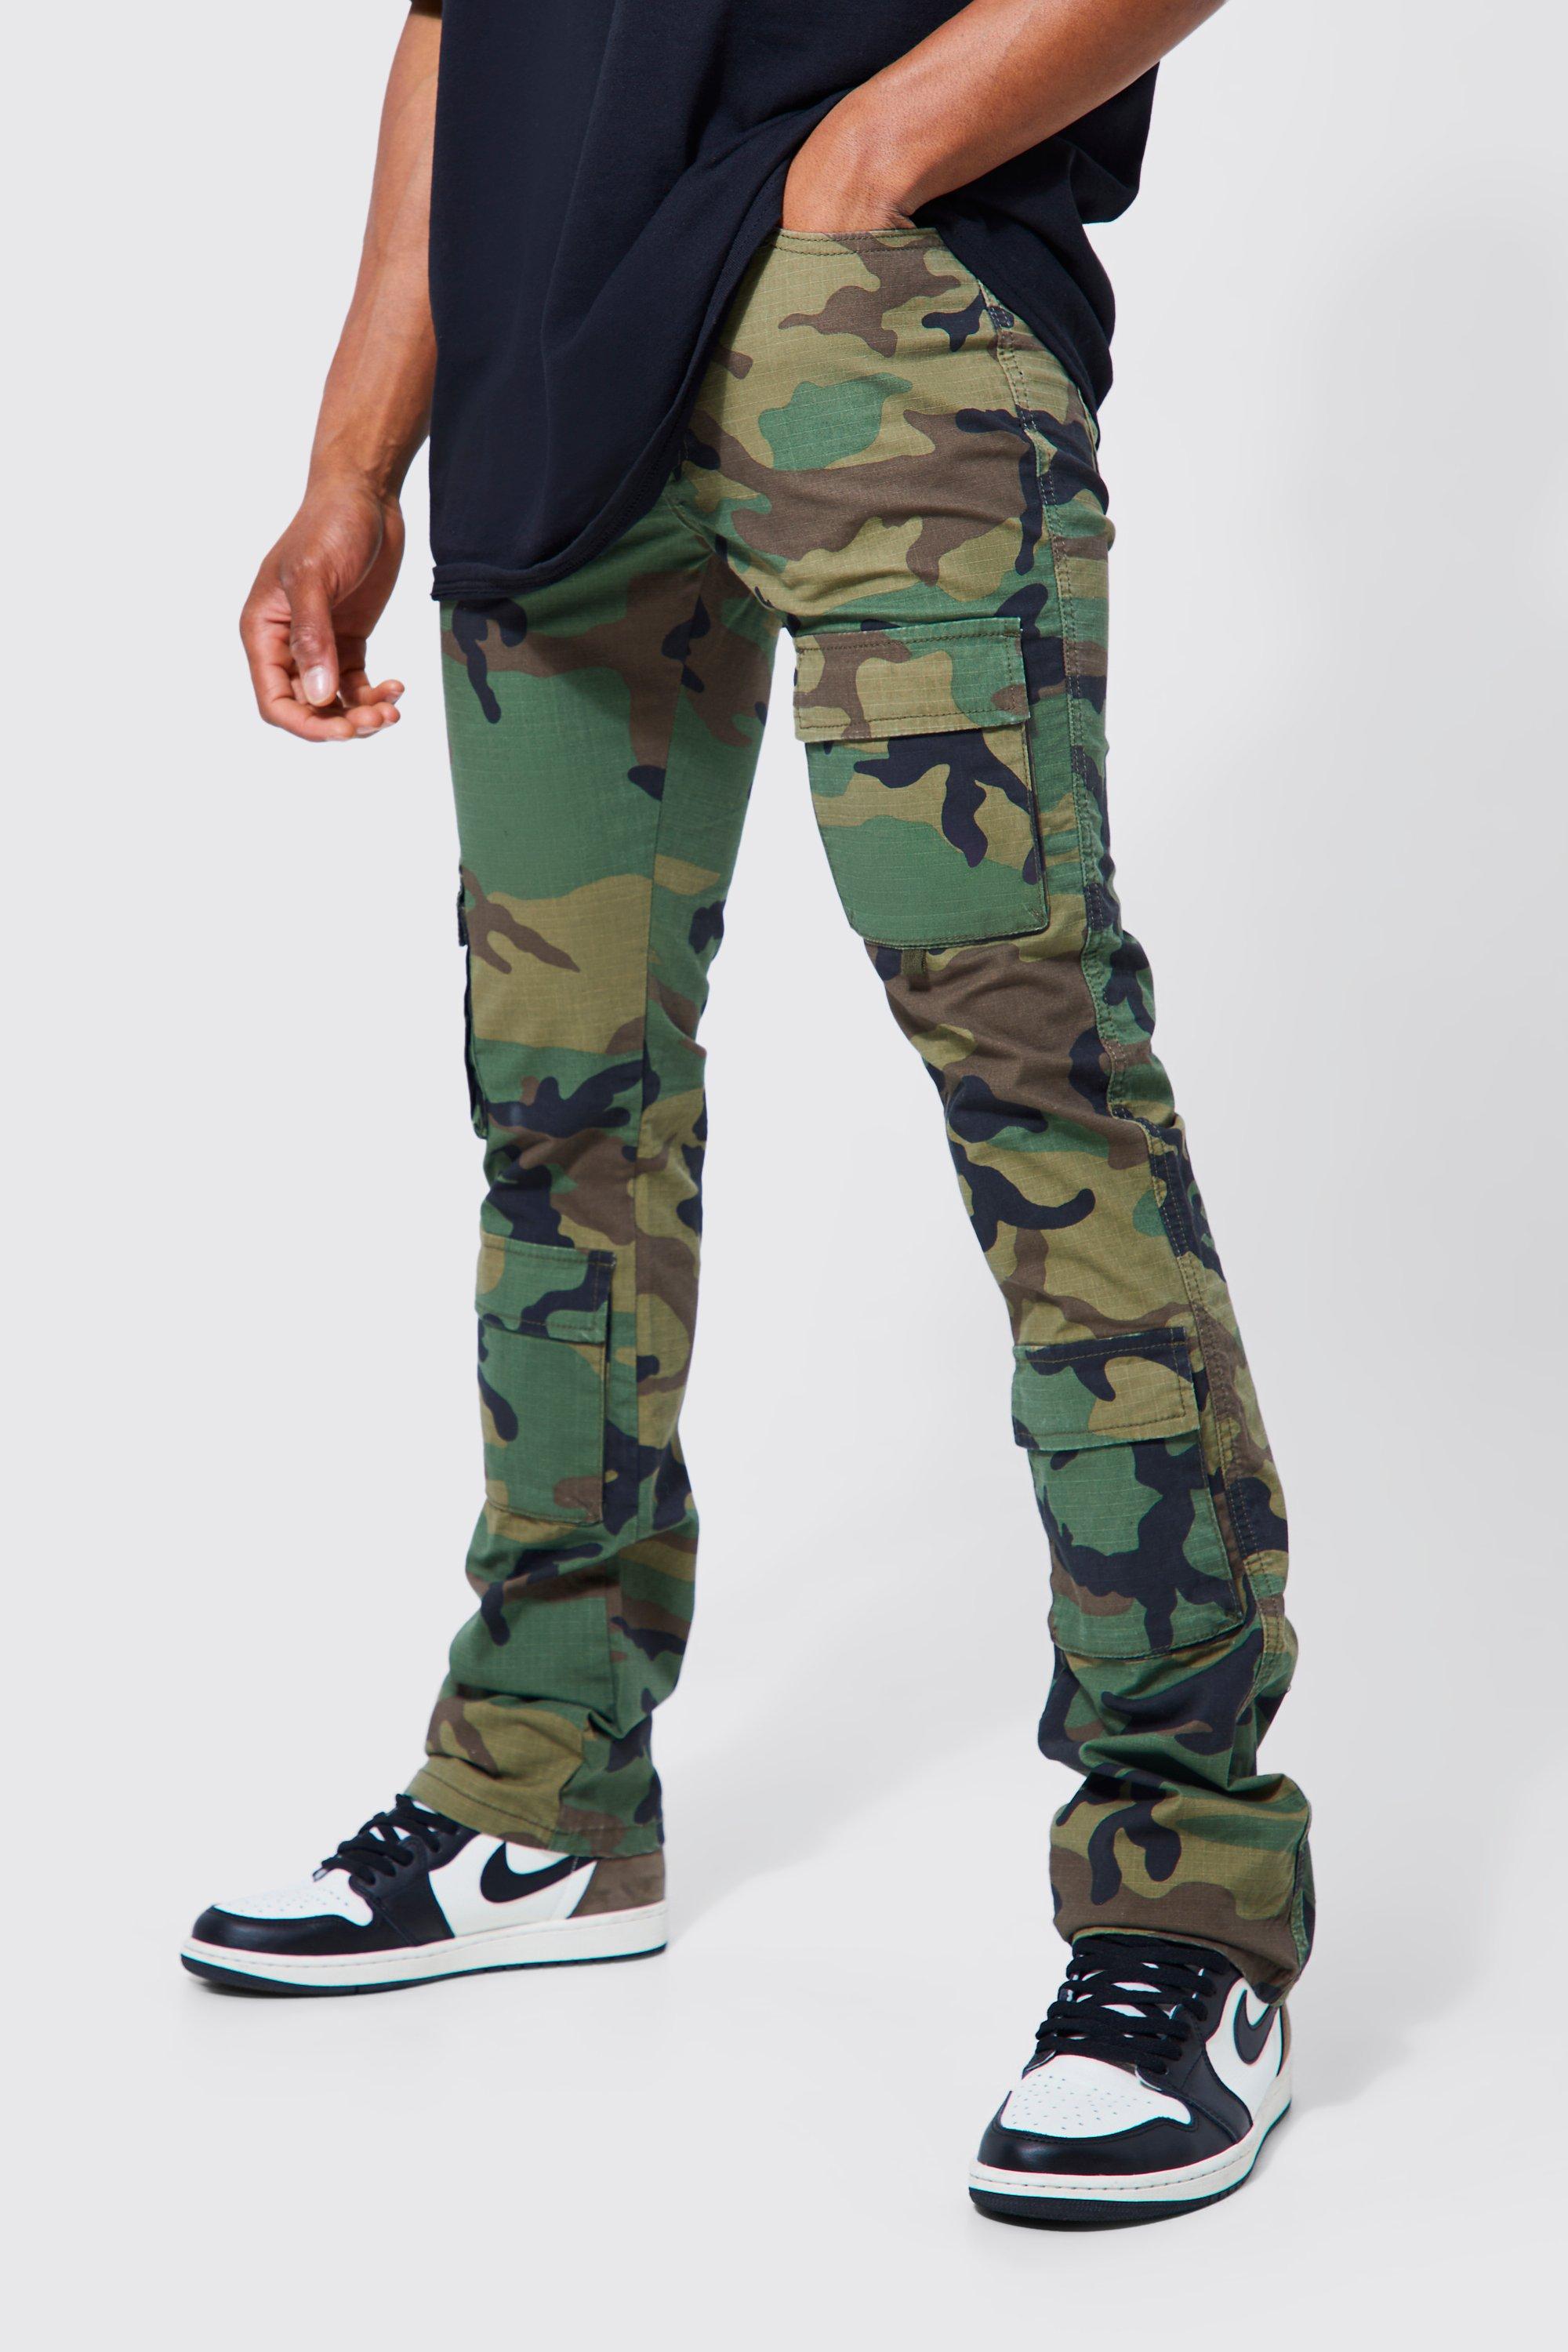 pantalon cargo imprimé camouflage homme - kaki - 28, kaki